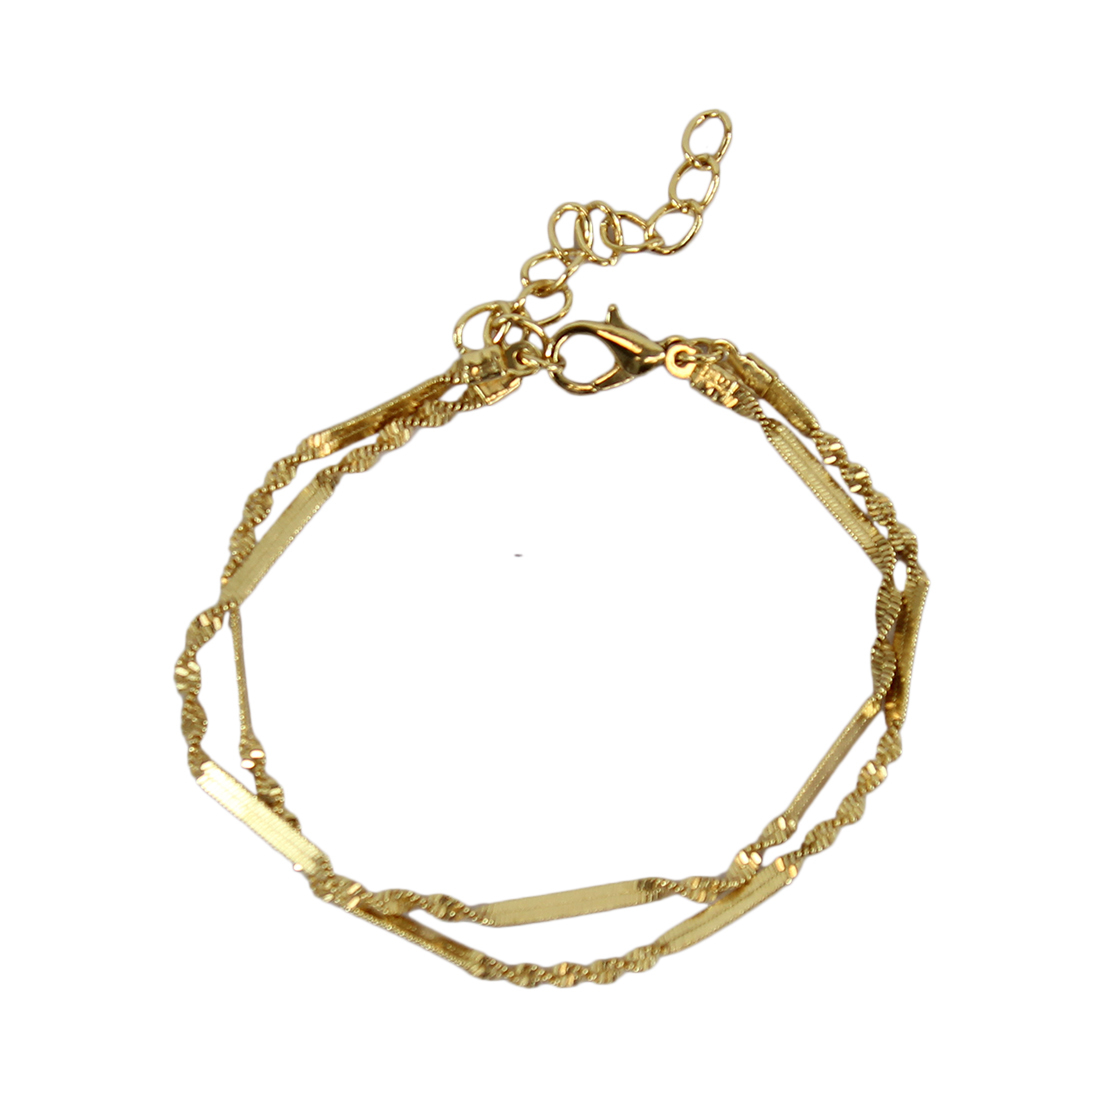 * Twist chain elegant bracelet